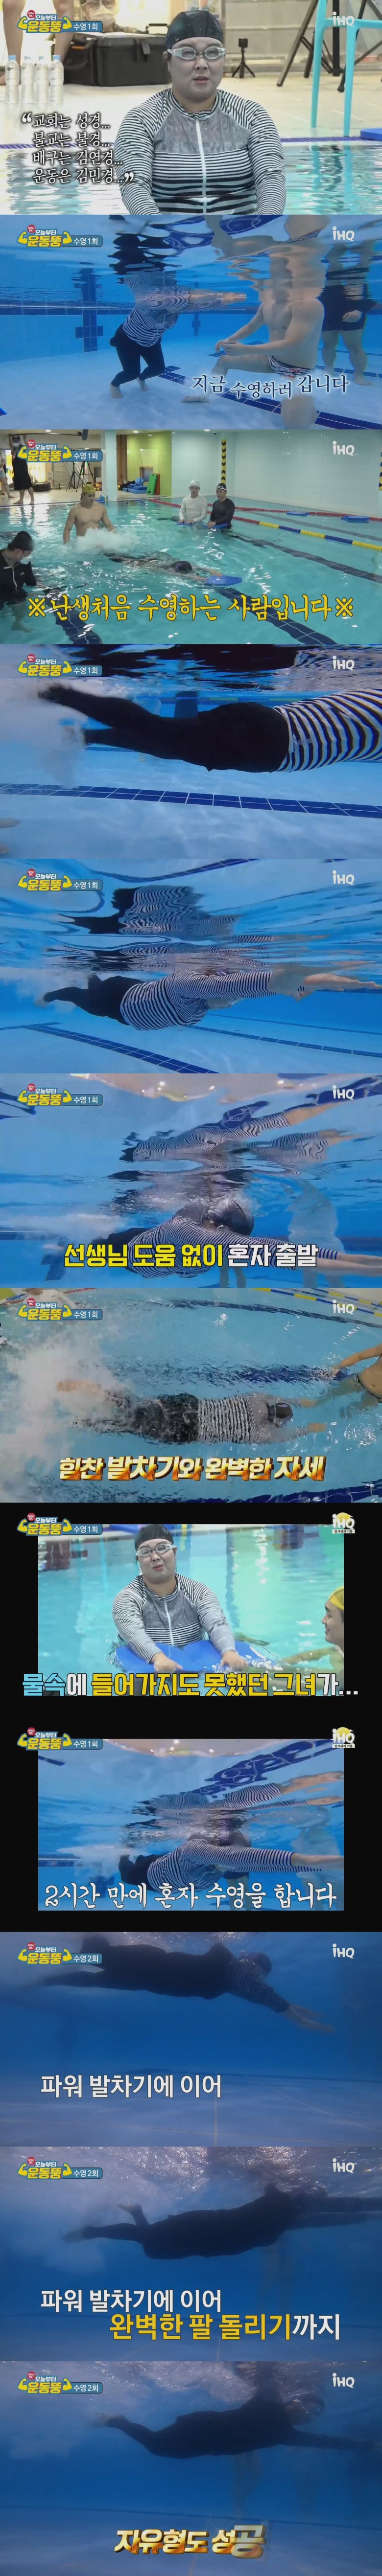 First time learning swimming, Kim Min Kyung Kim.jpg